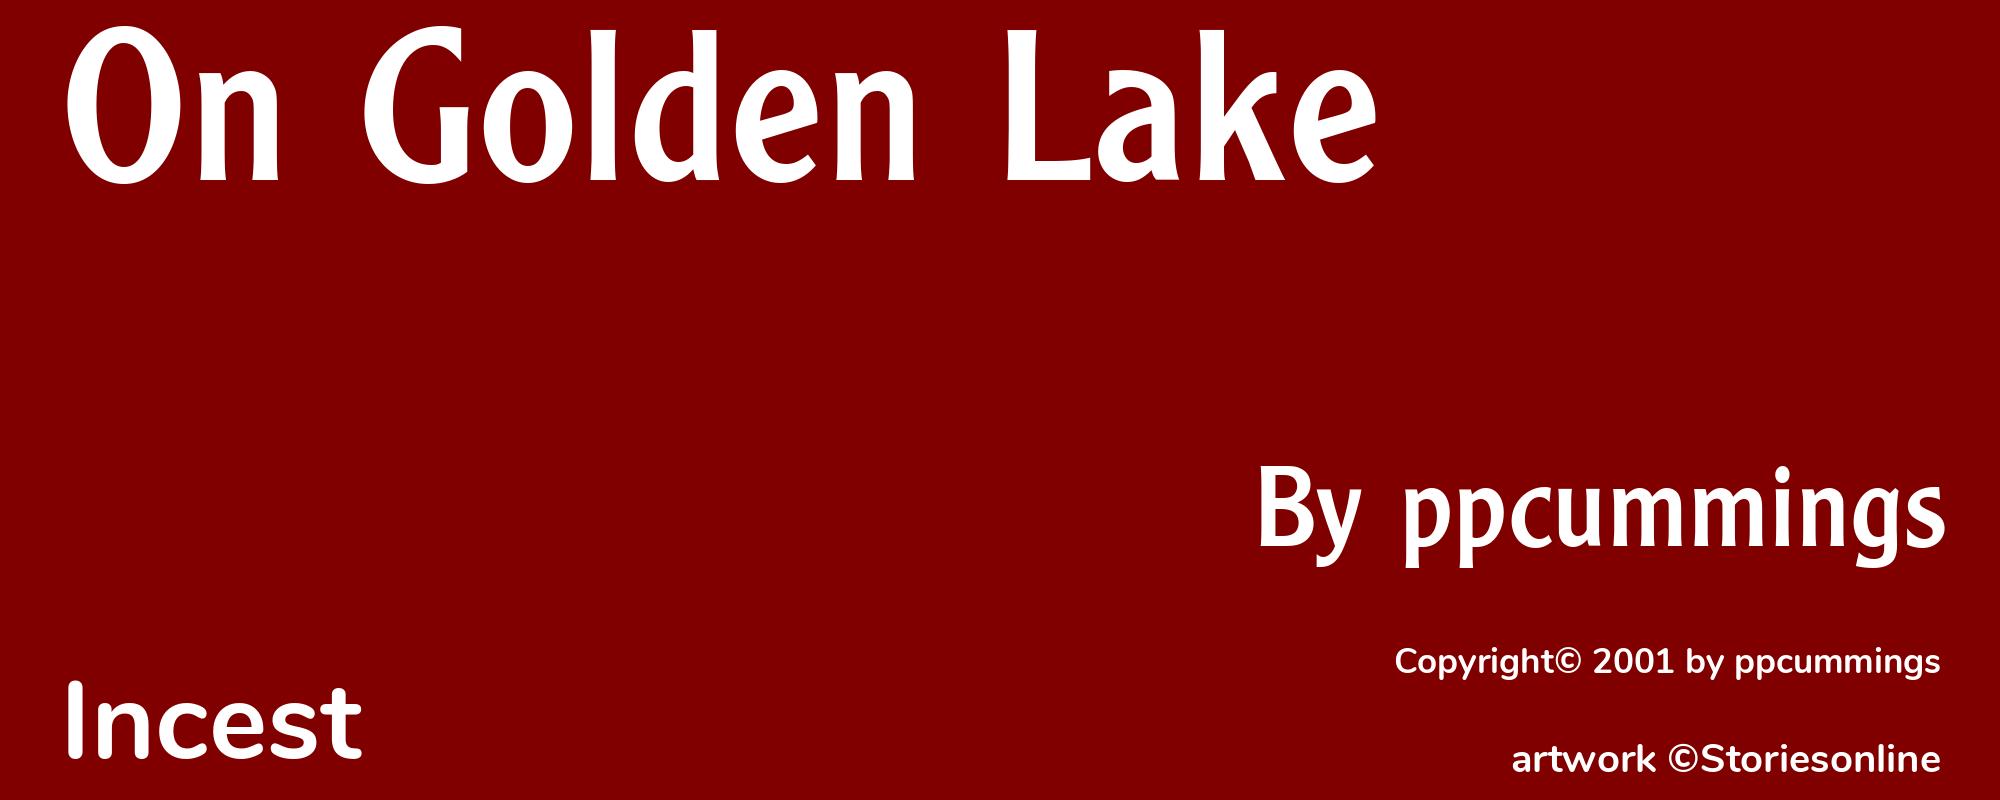 On Golden Lake - Cover